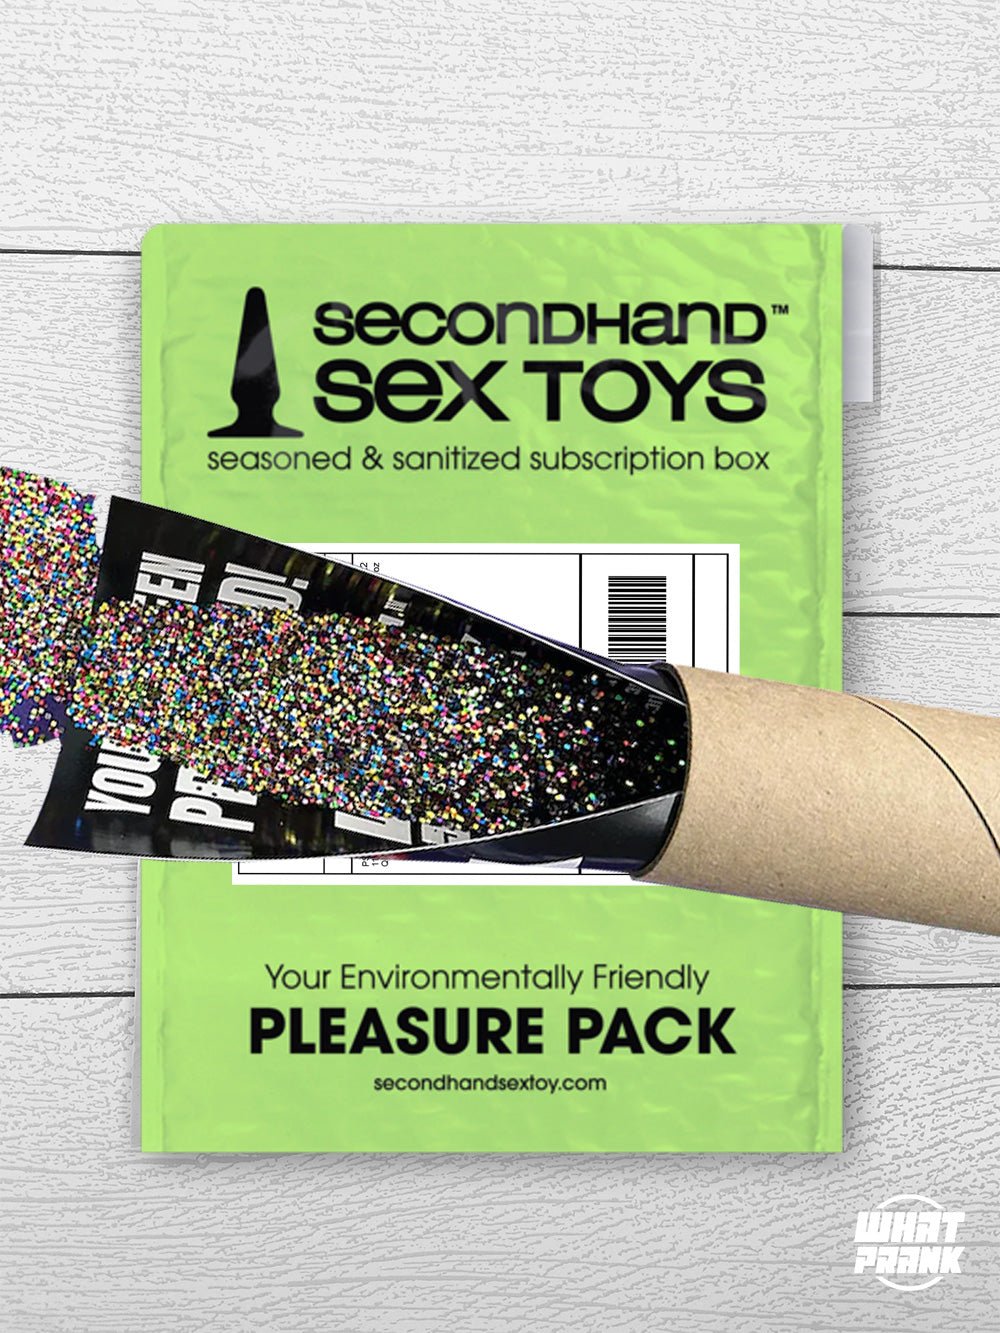 Secondhand Sex Toys Mail Prank â€“ What Prank